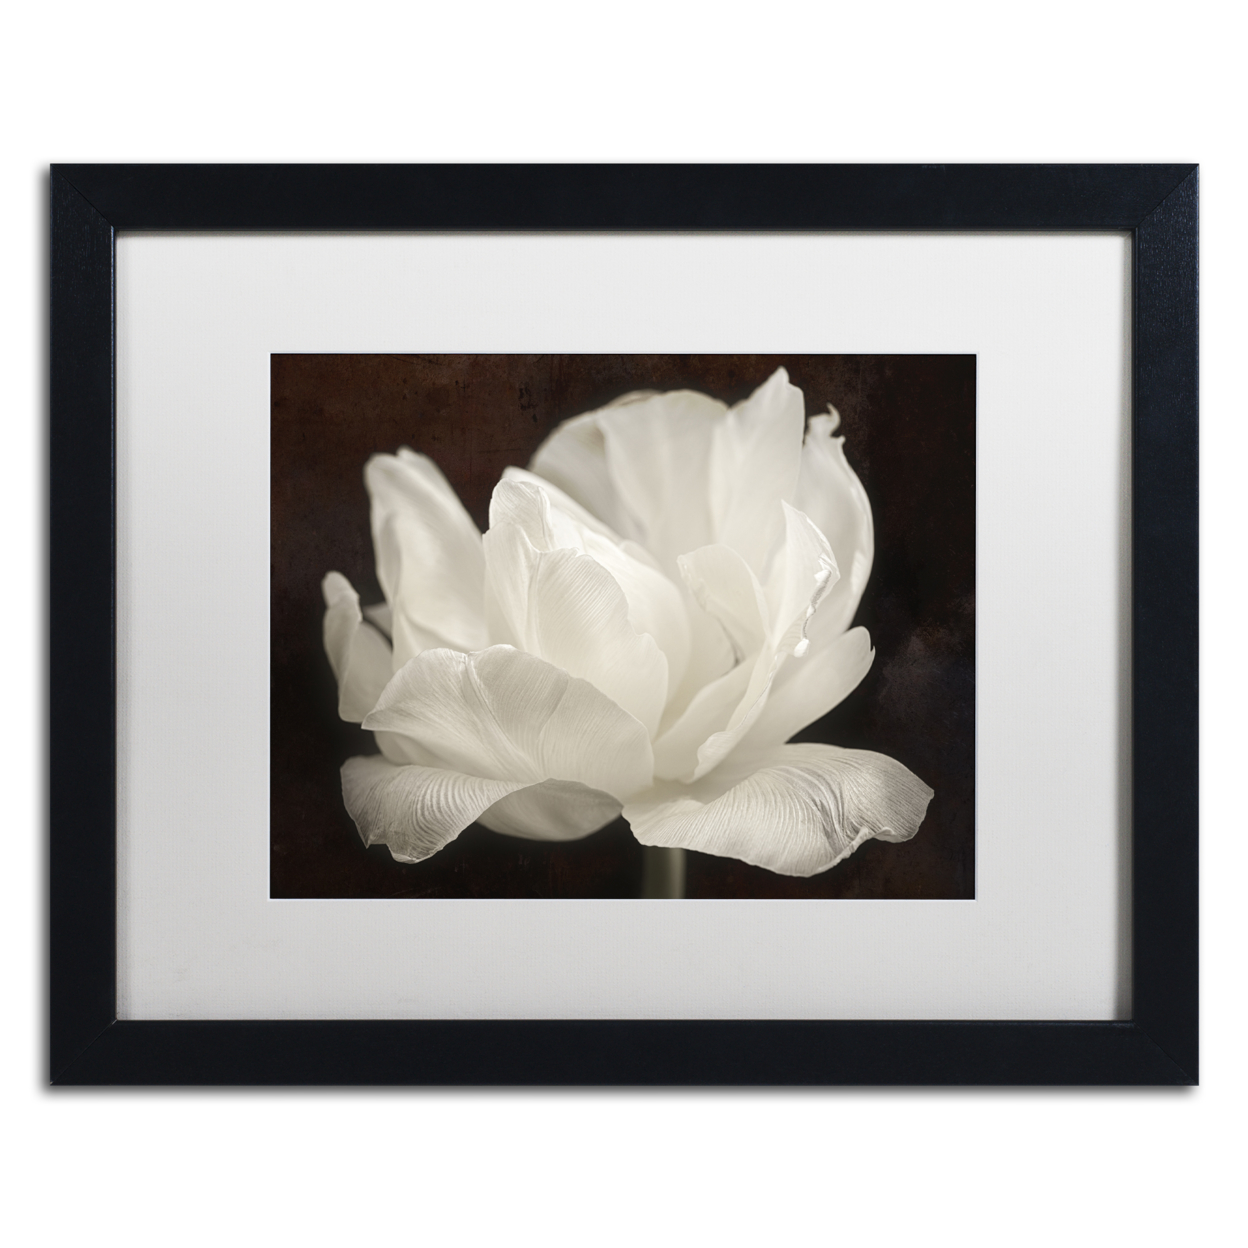 Cora Niele 'White Tulip III' Black Wooden Framed Art 18 X 22 Inches